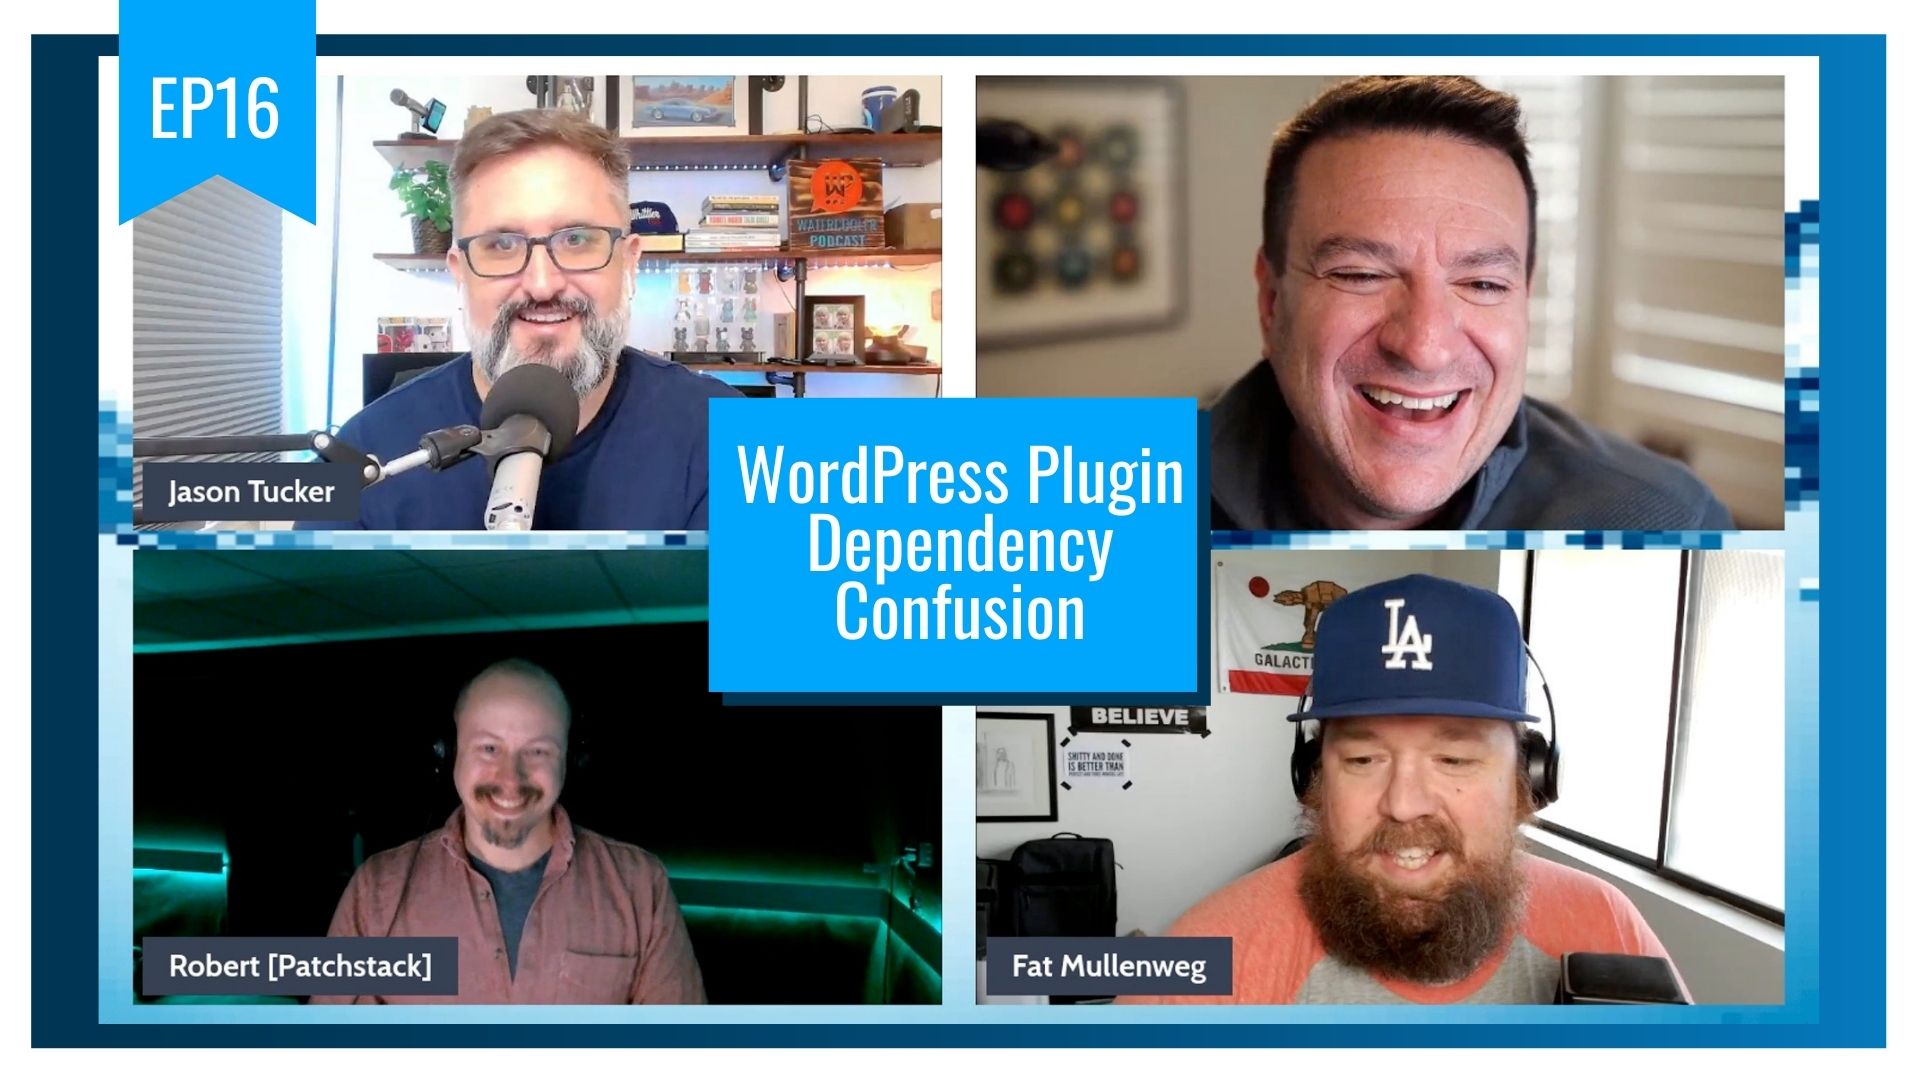 EP16 - WordPress Plugin Dependency Confusion